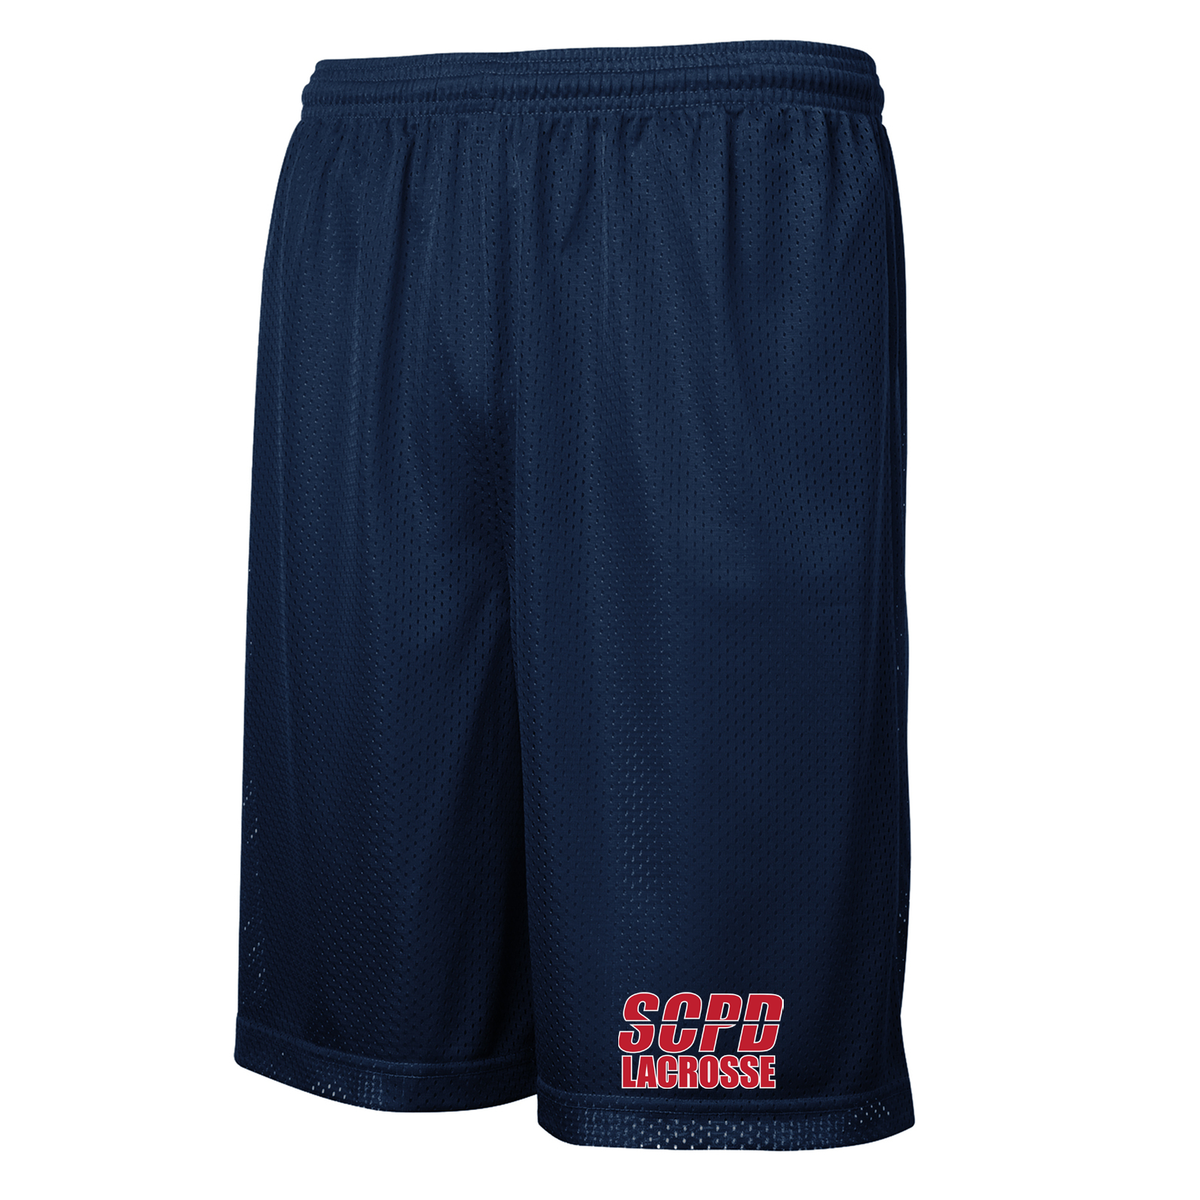 SCPD Lacrosse Classic Mesh Shorts